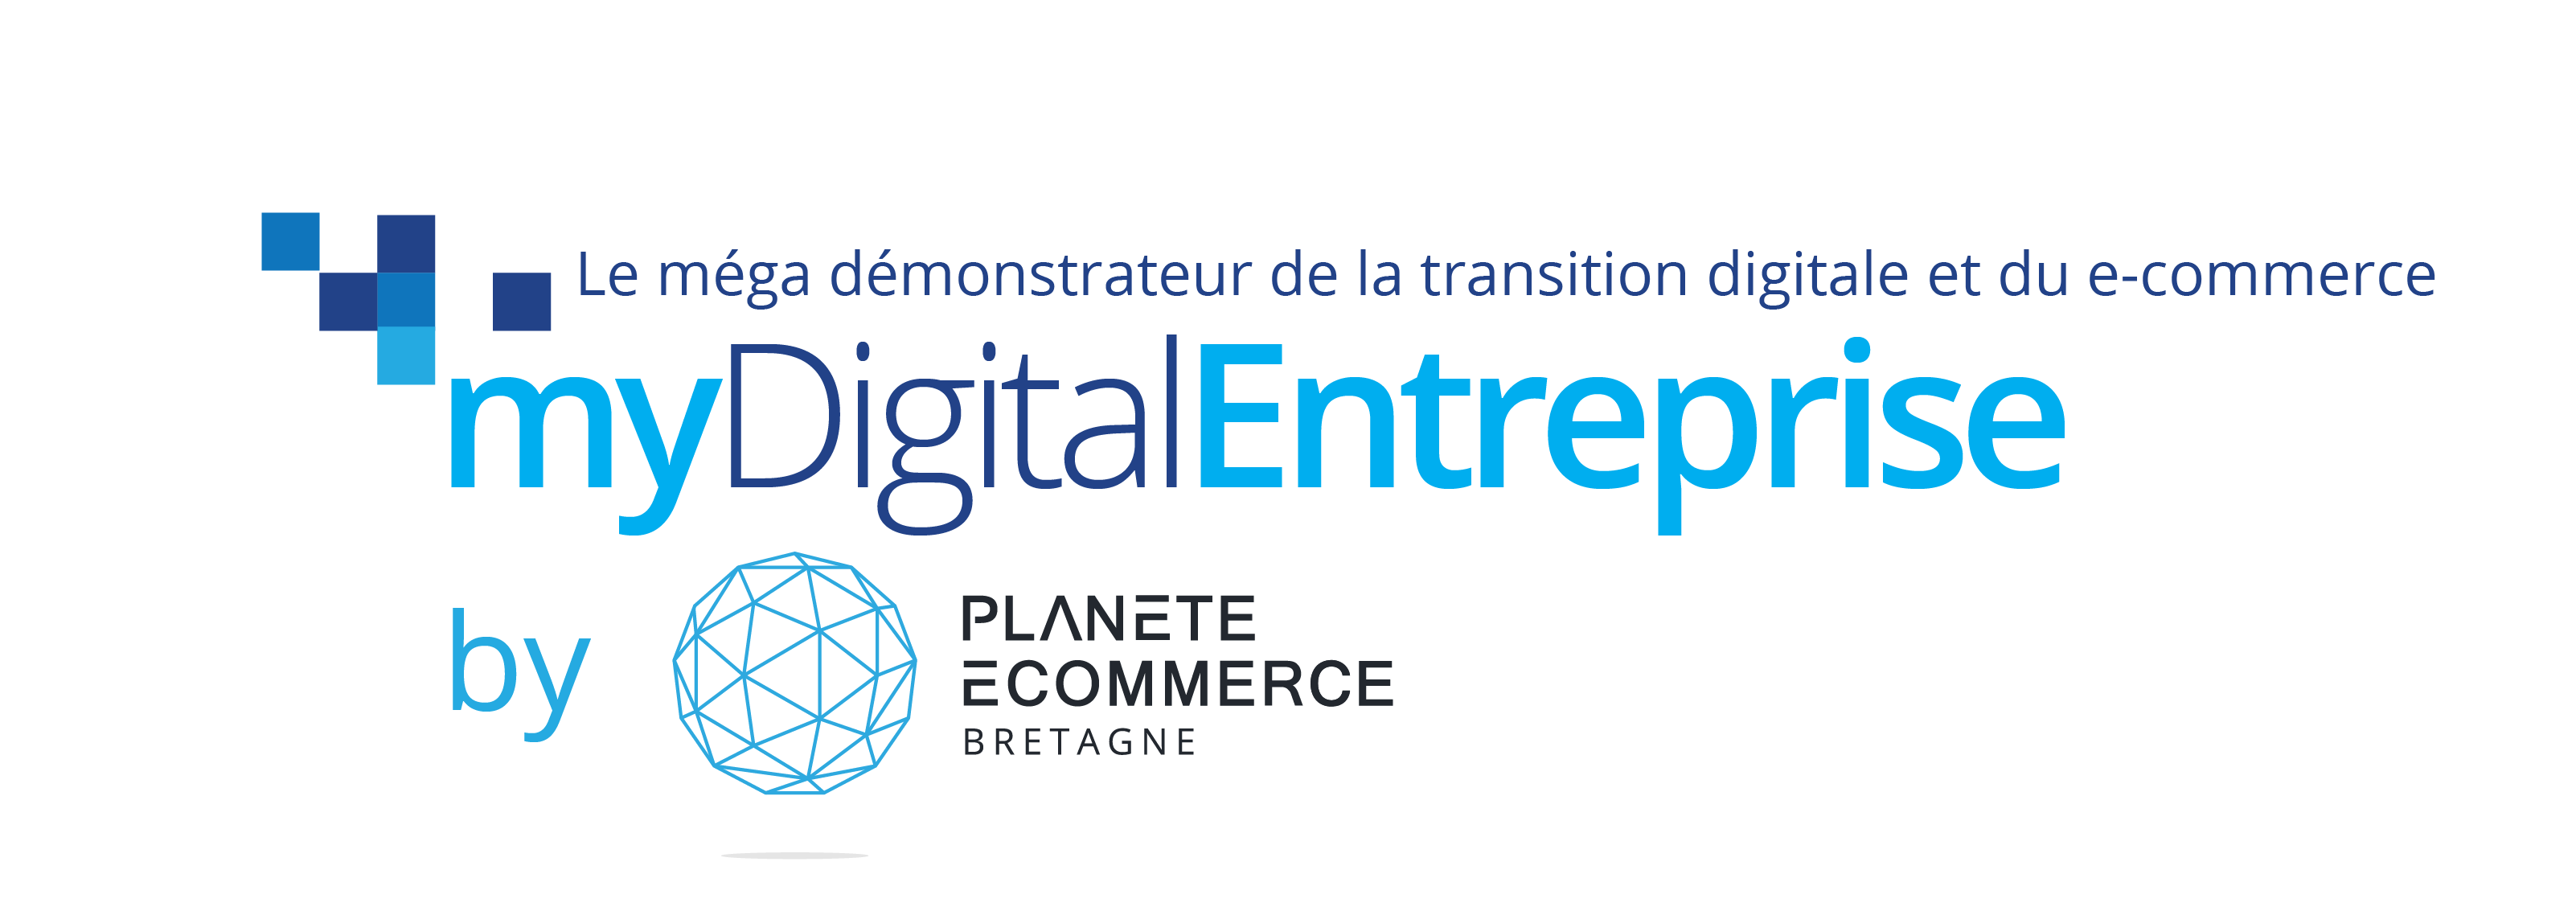 My Digital Entreprise by PEC Bretagne